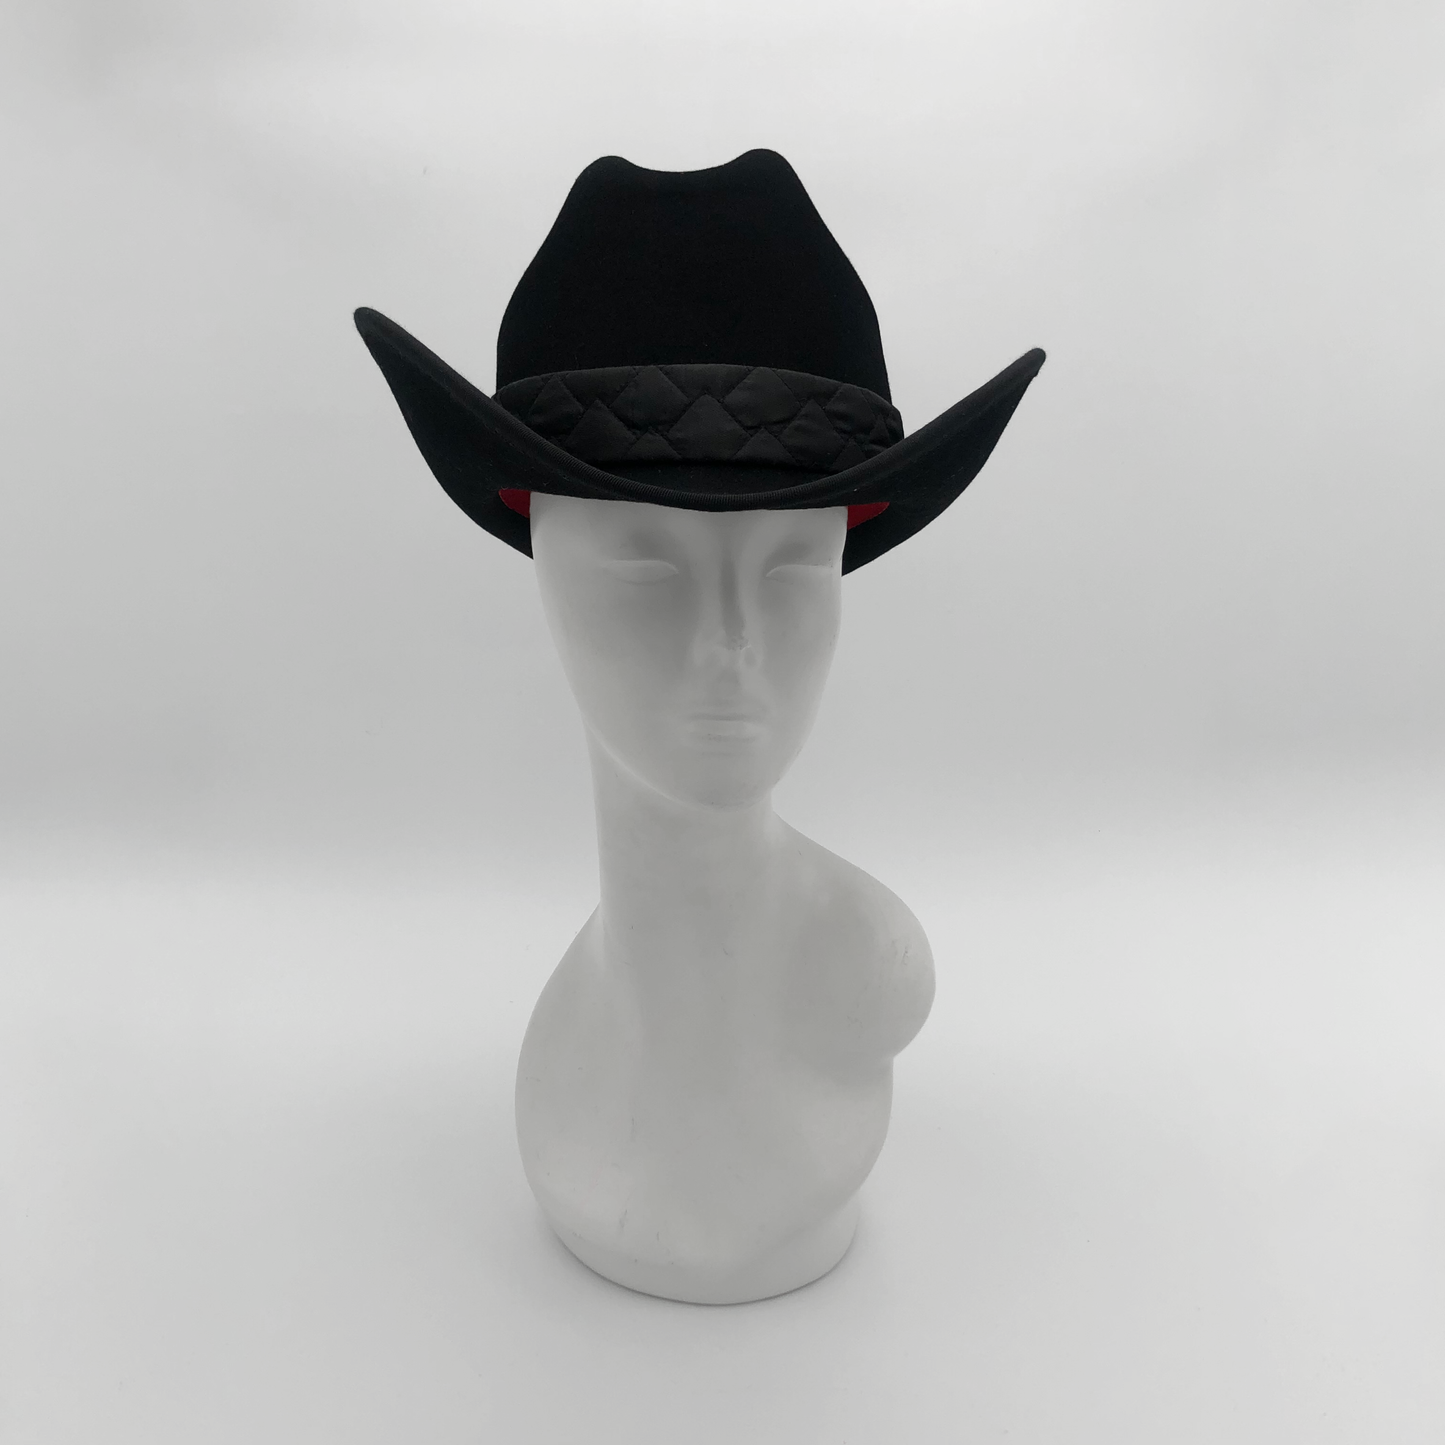 Black Felt Cowboy Hat with Puffer Band